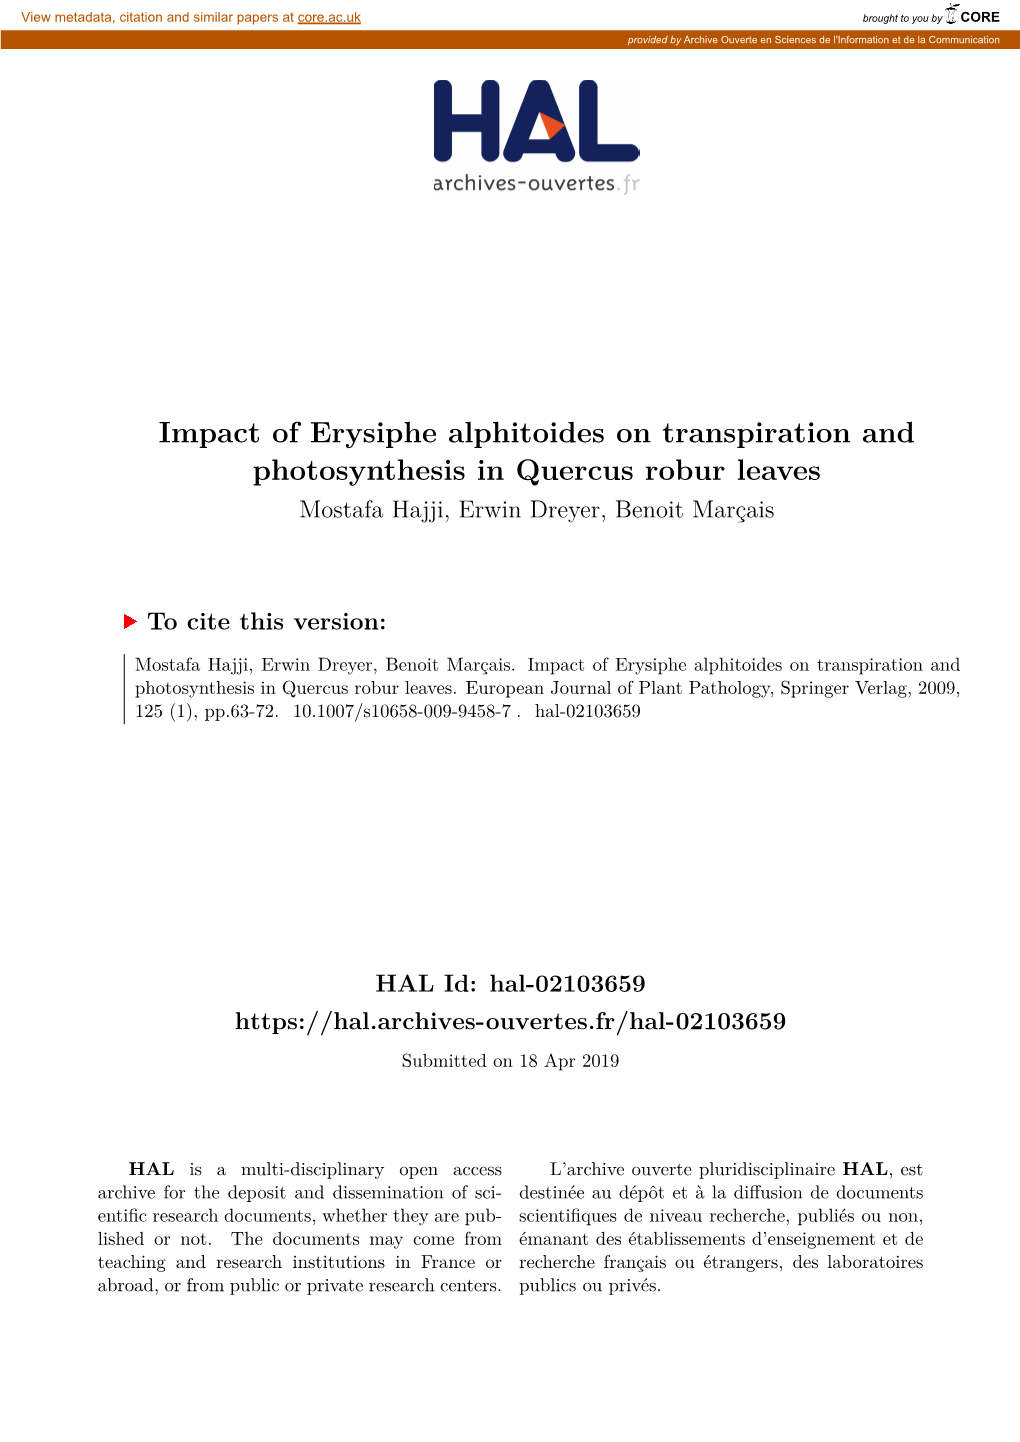 Impact of Erysiphe Alphitoides on Transpiration and Photosynthesis in Quercus Robur Leaves Mostafa Hajji, Erwin Dreyer, Benoit Marçais